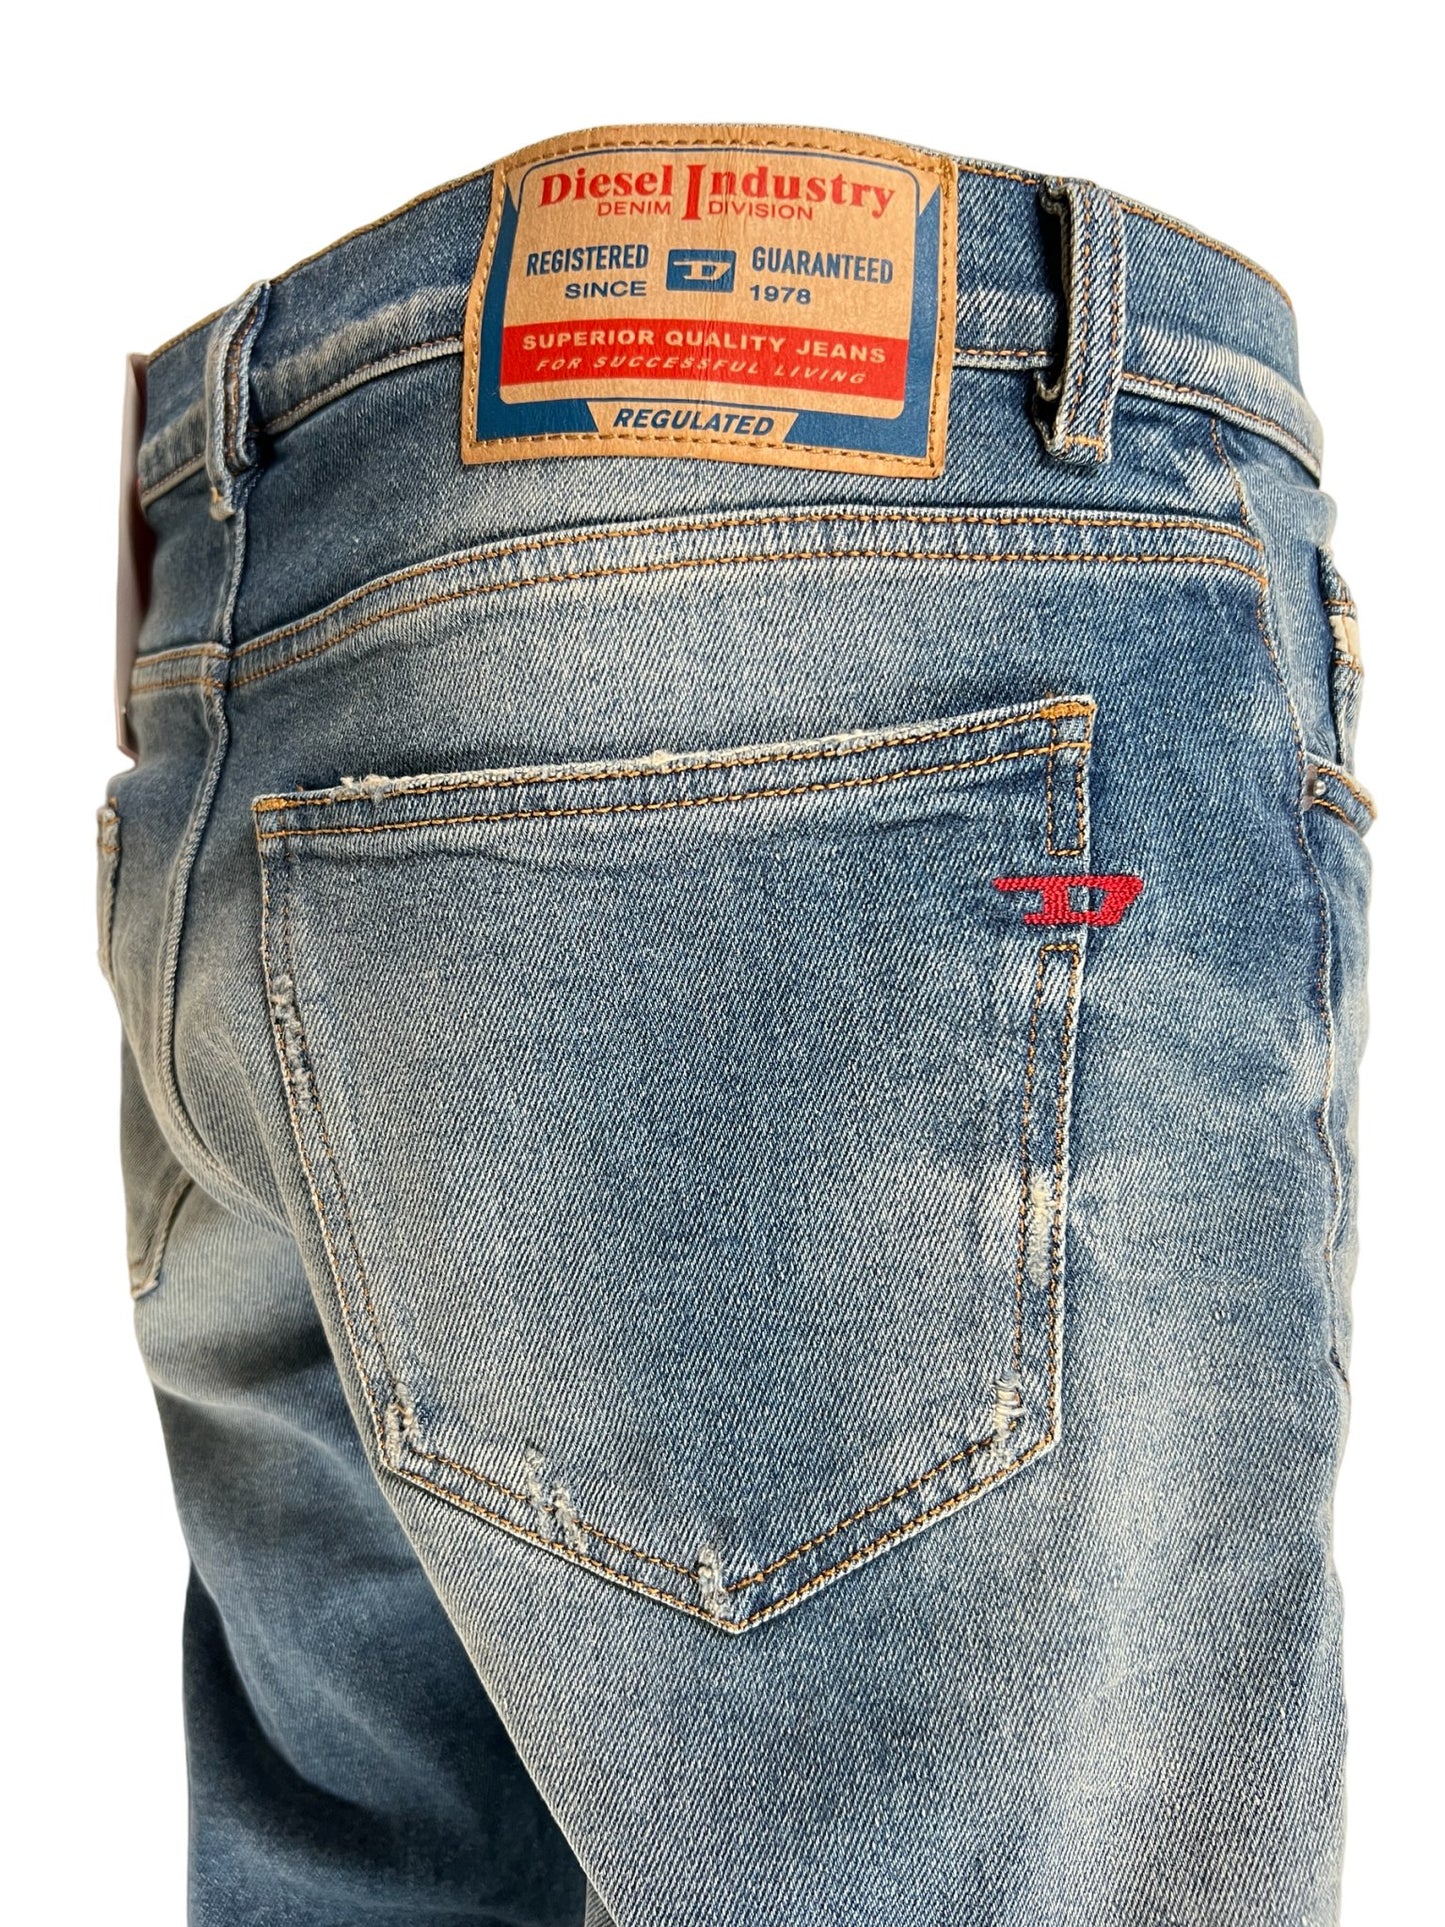 A pair of DIESEL 2019 D-STRUKT 9H55 DENIM slim-fit jeans with a label on the back.